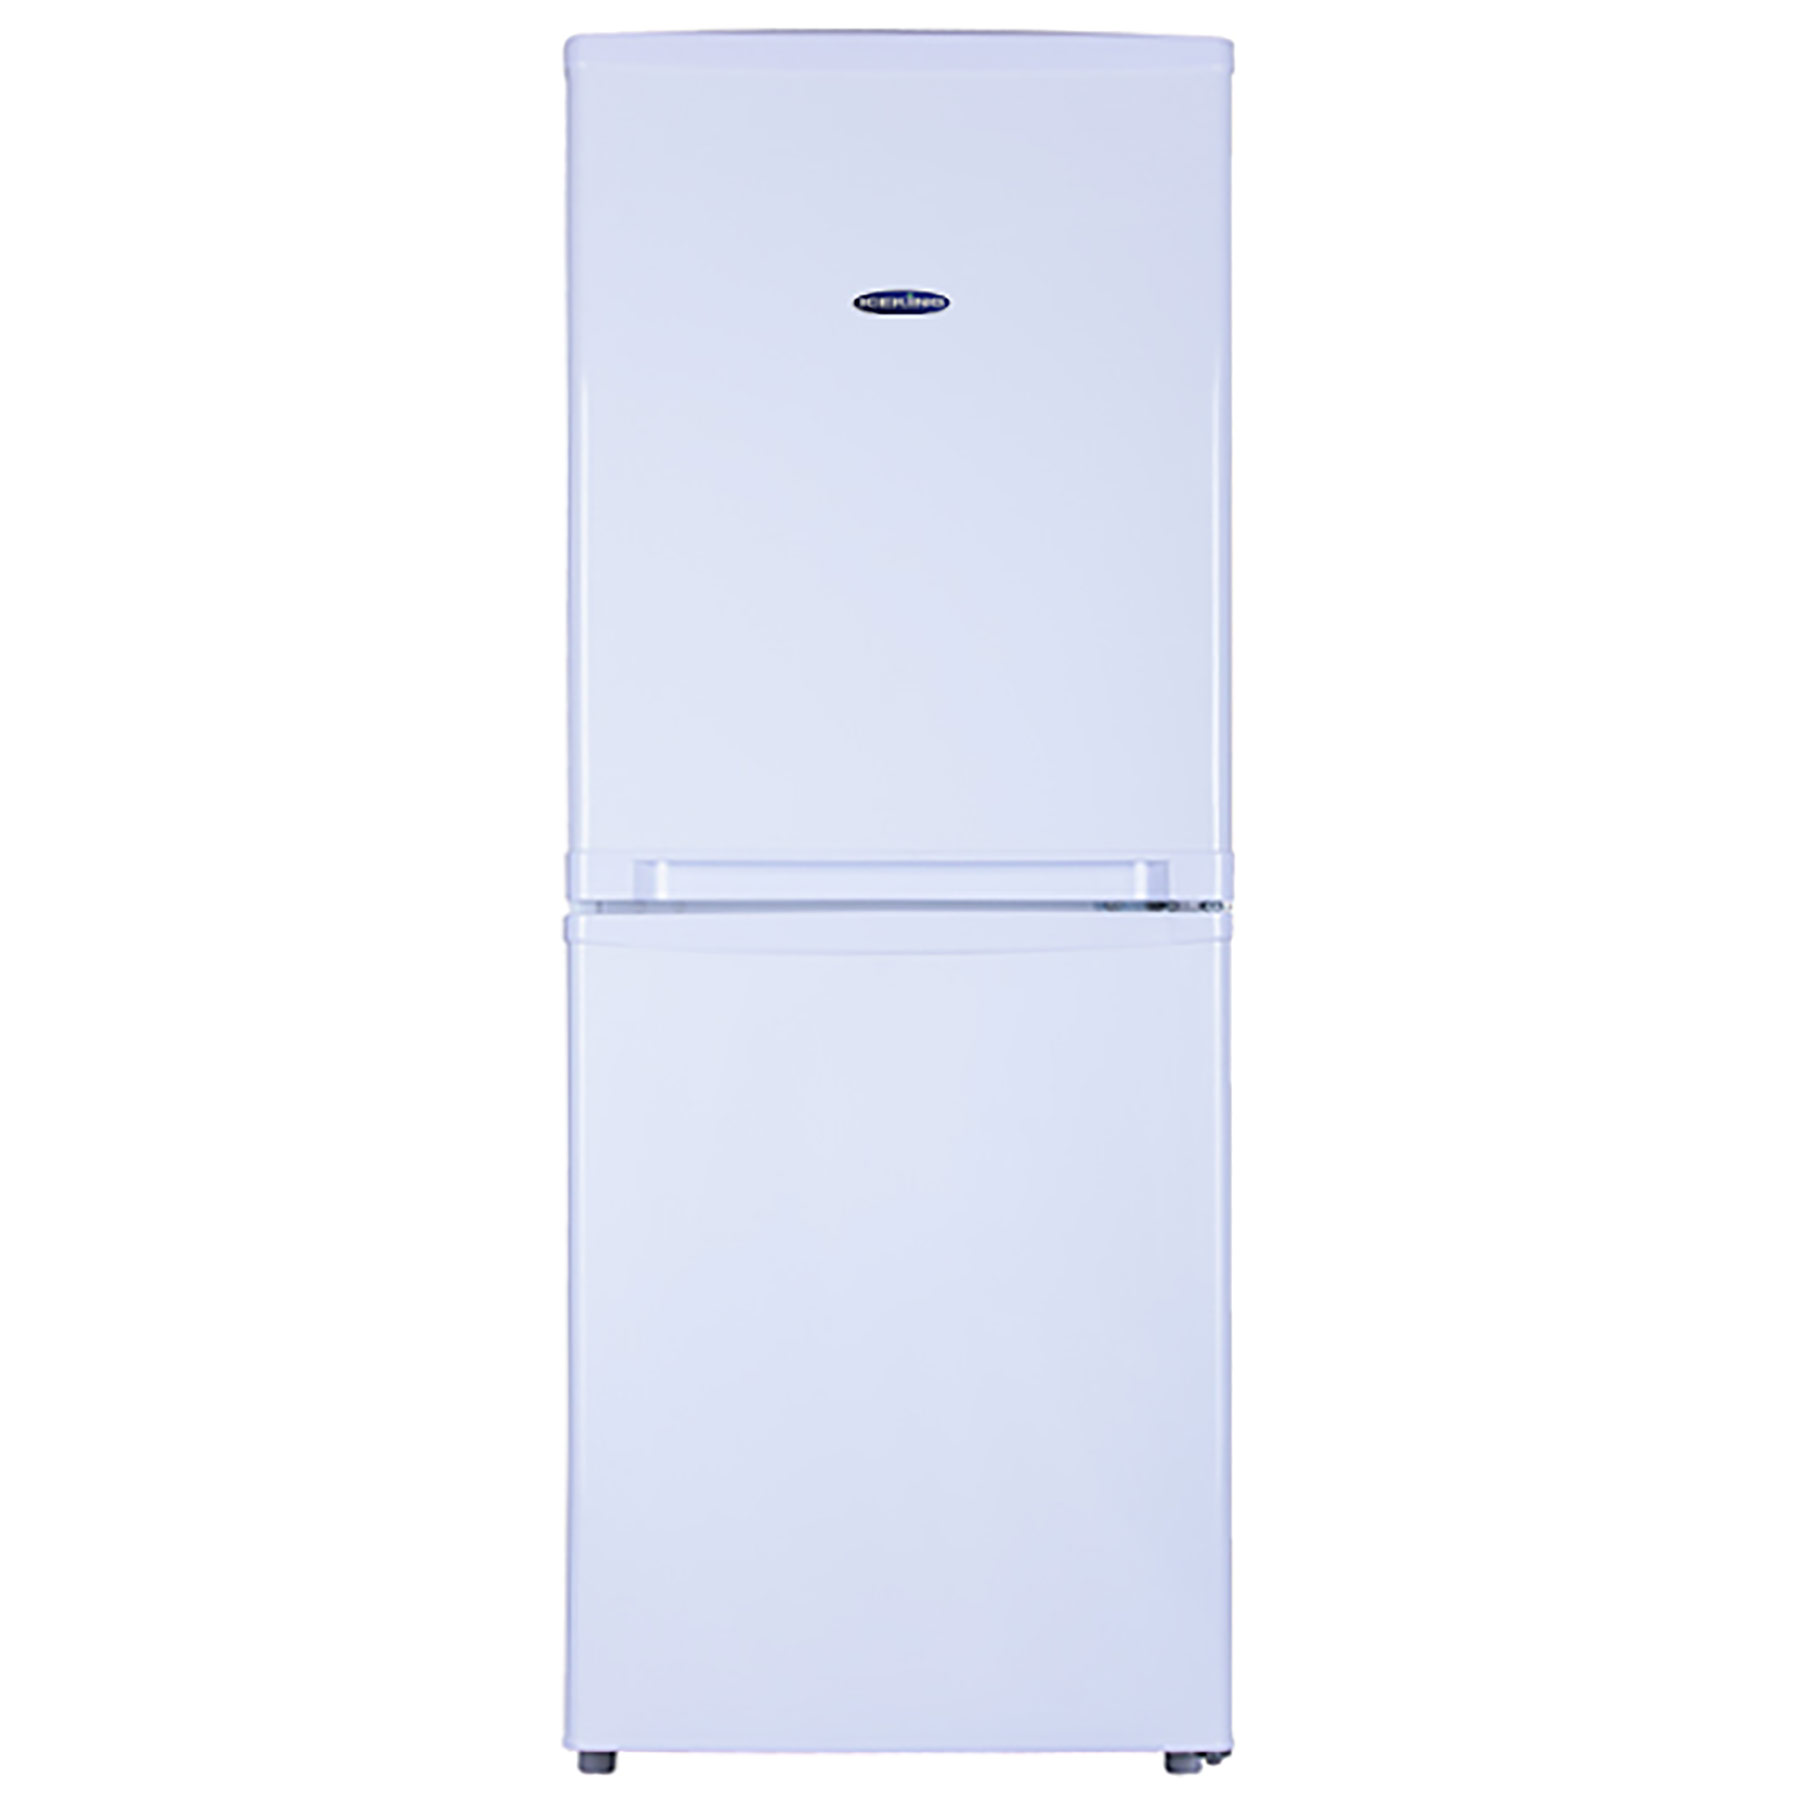 Image of Iceking IK9055EW 50cm Fridge Freezer in White 1 30m E Rated